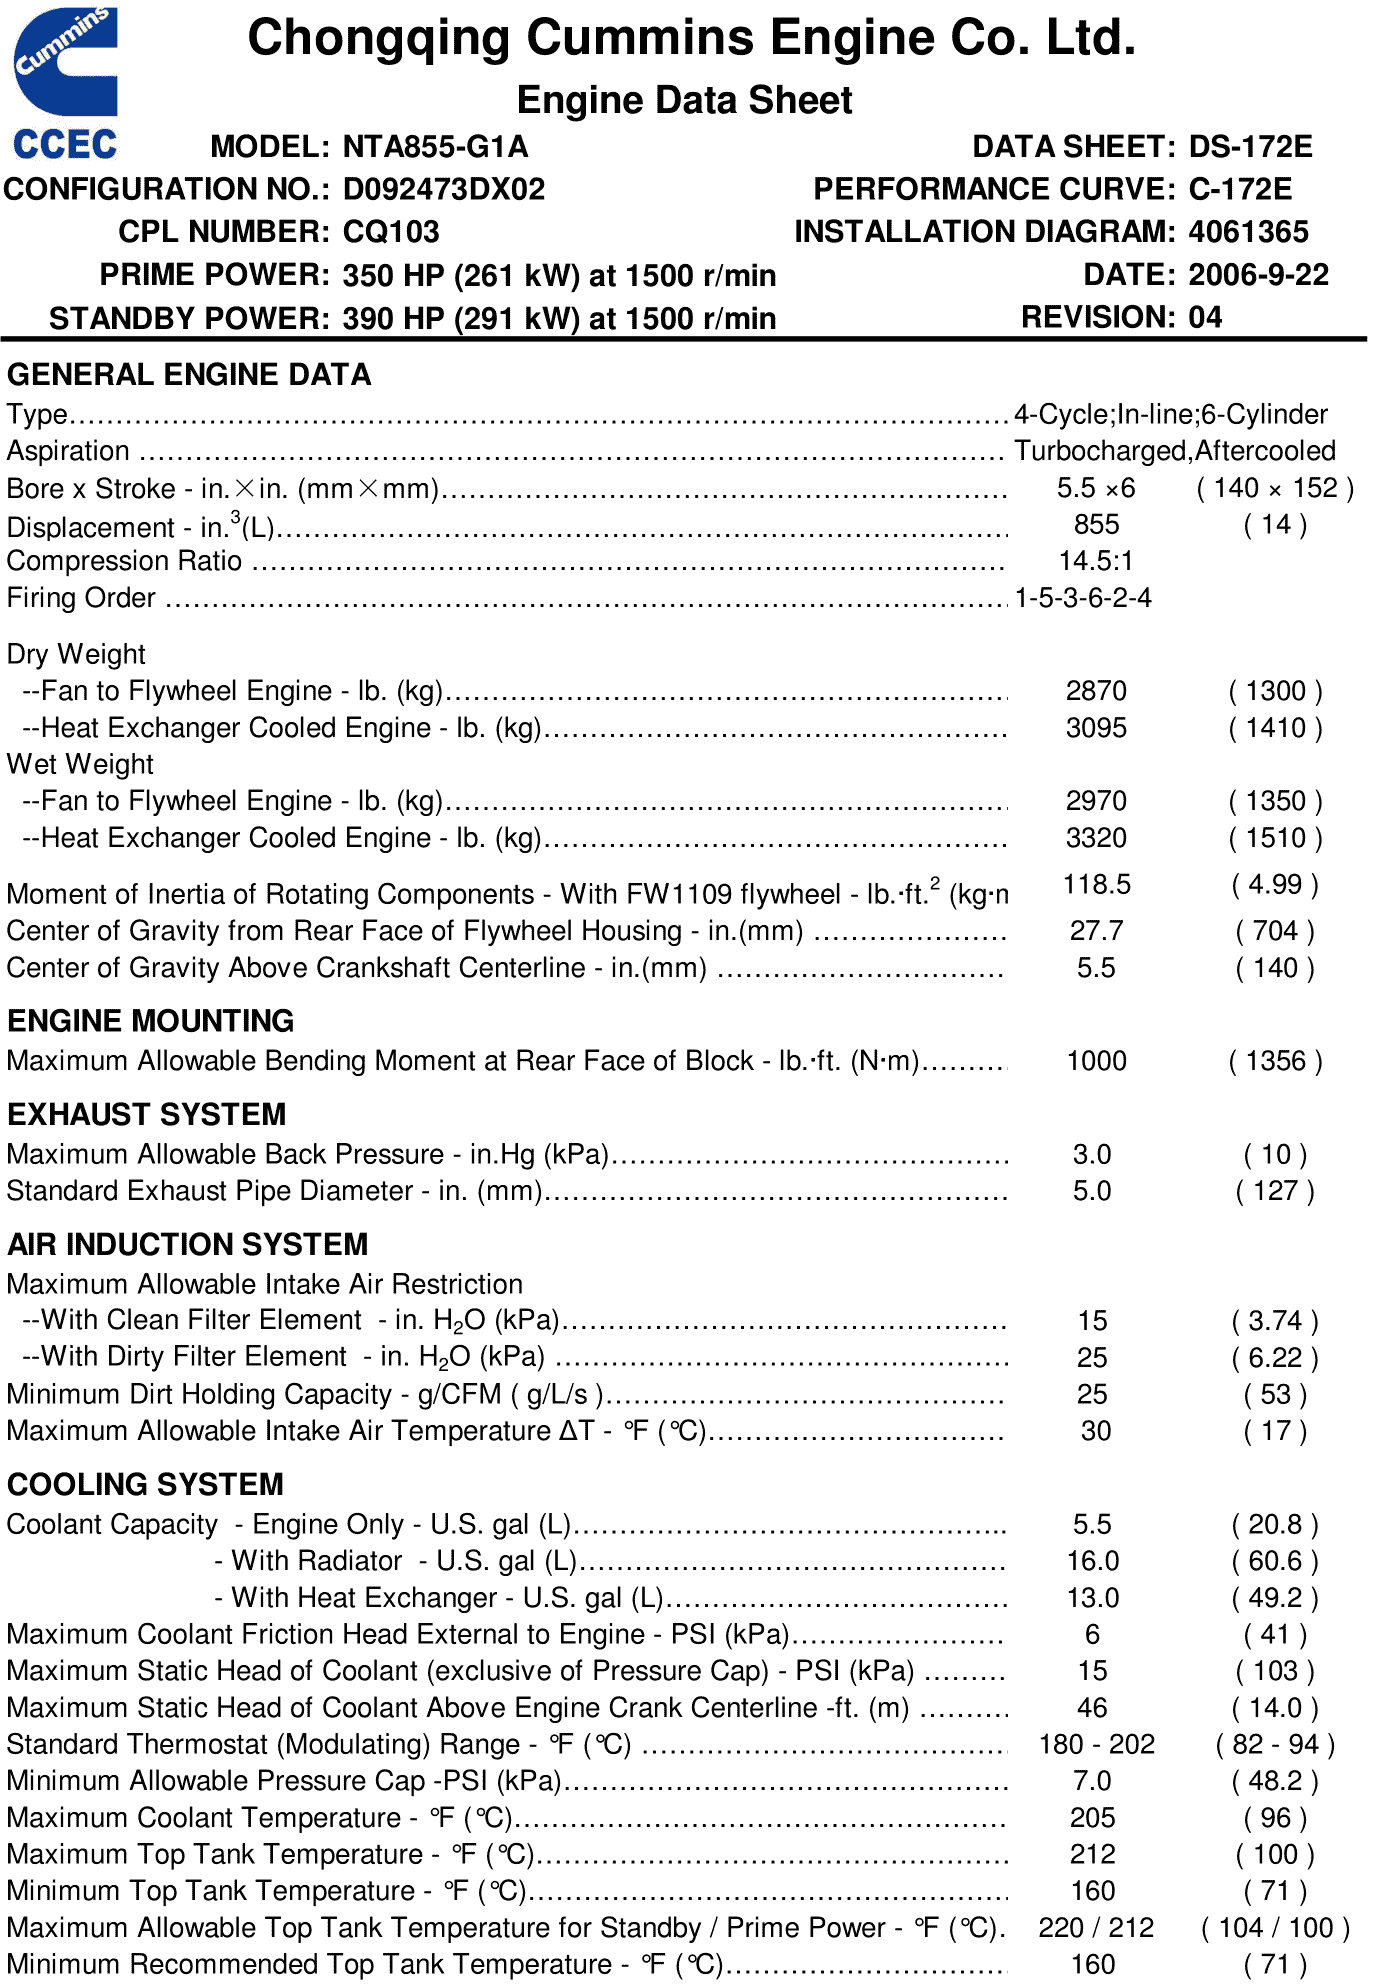 Cummins NTA855-G1A datasheet